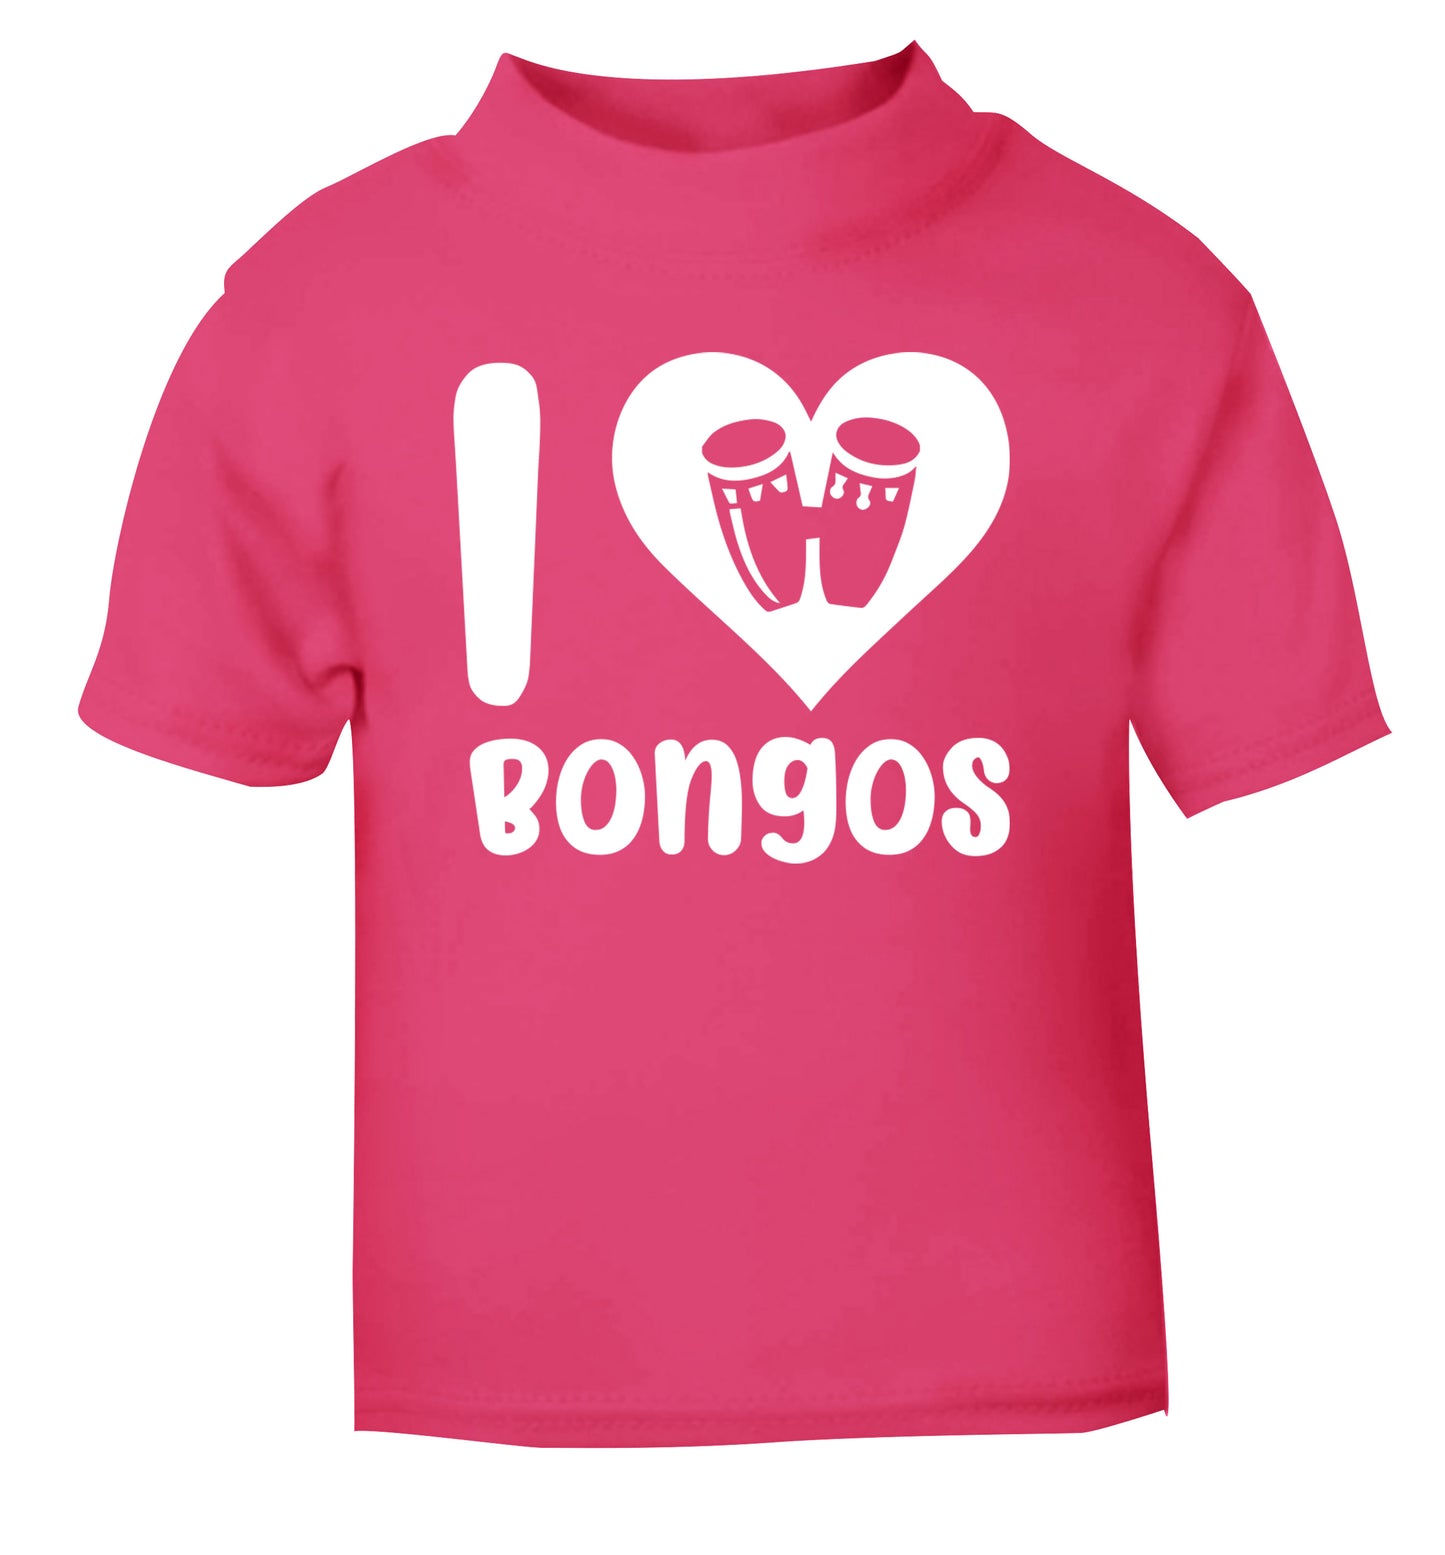 I love bongos pink Baby Toddler Tshirt 2 Years